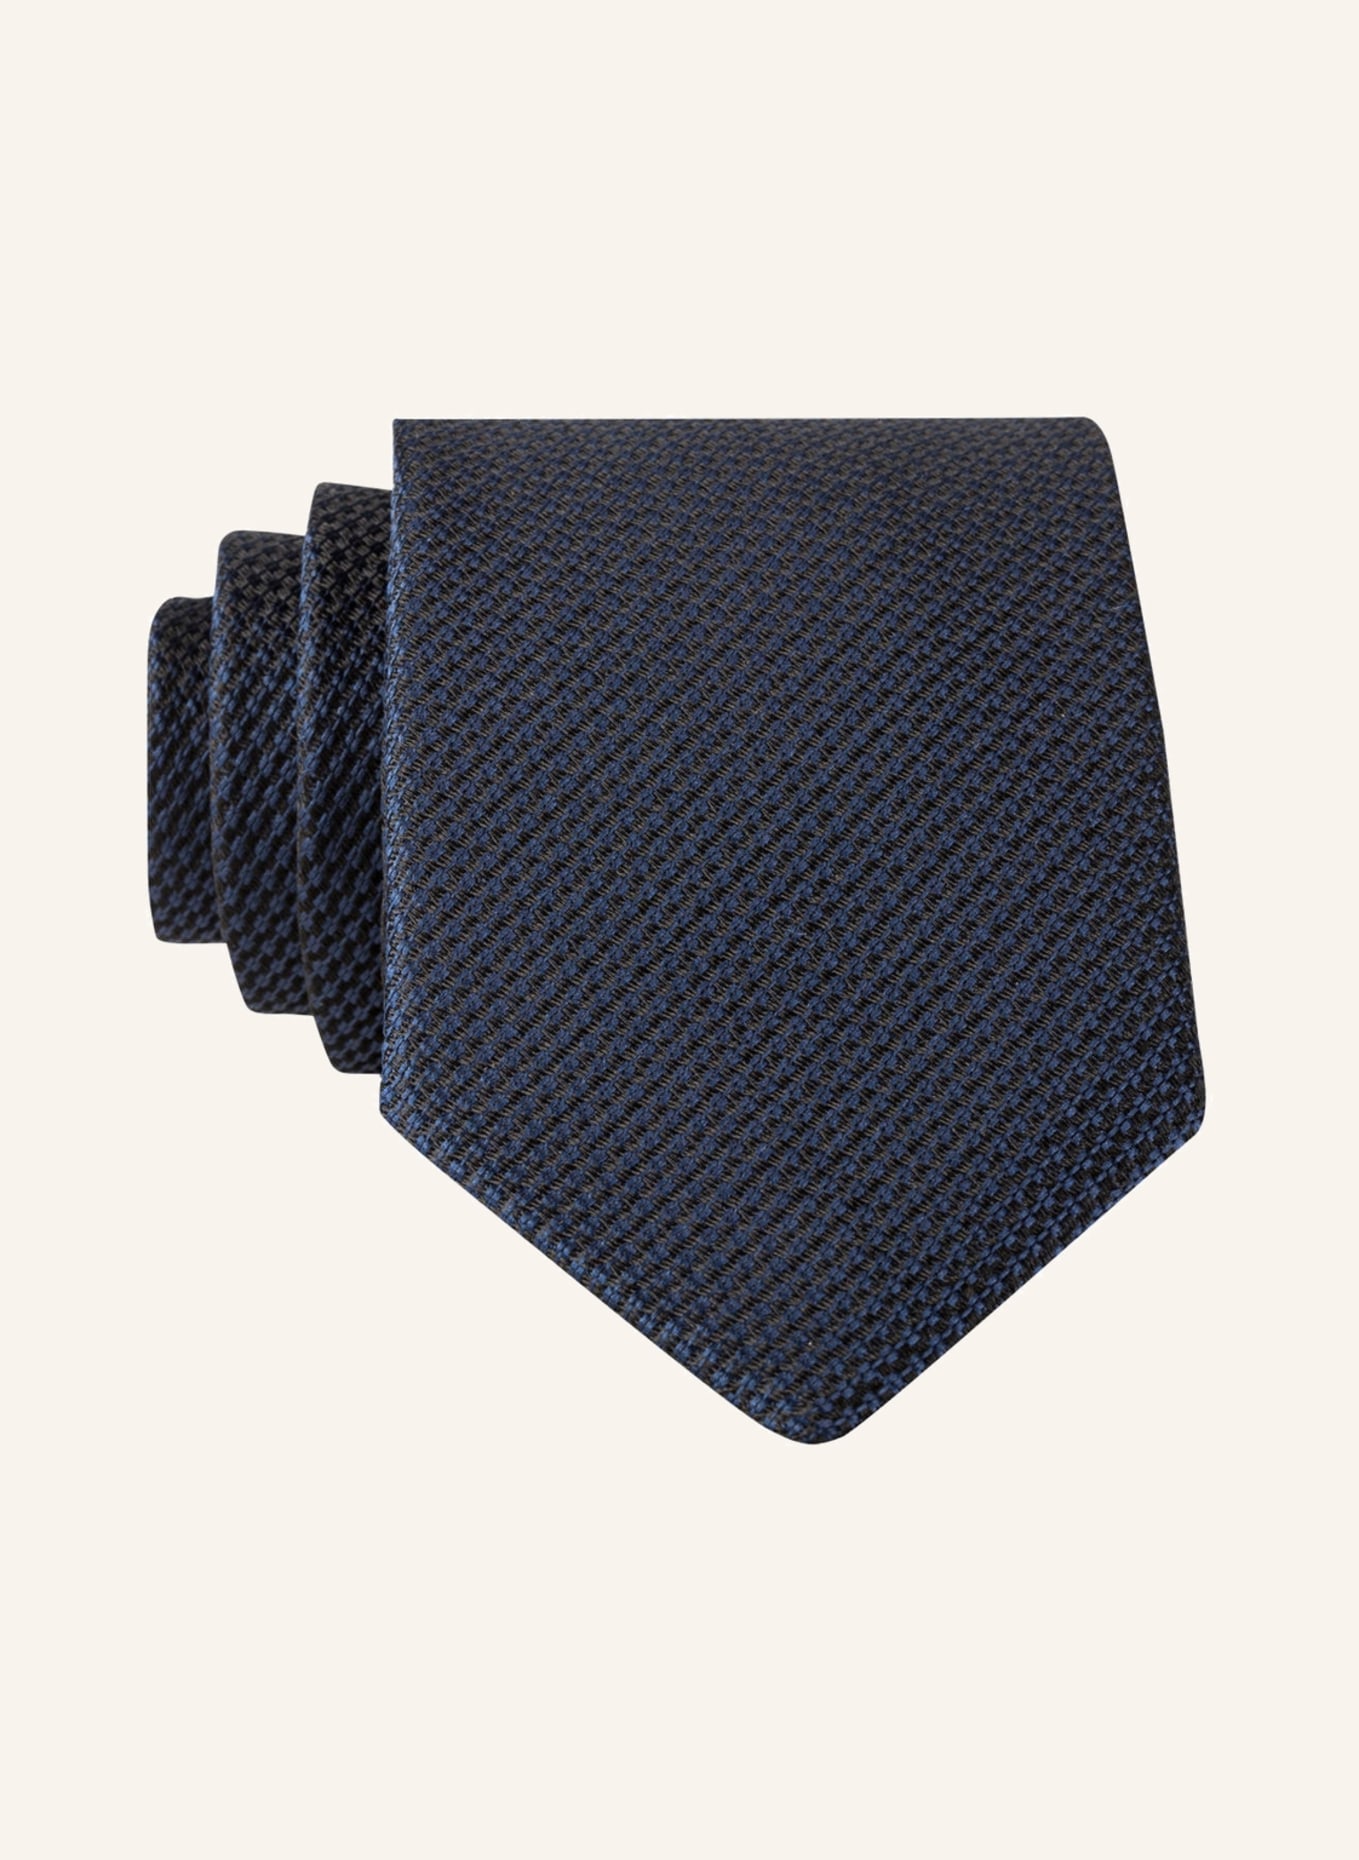 G.O.L. FINEST COLLECTION Krawatte, Farbe: NAVY (Bild 1)